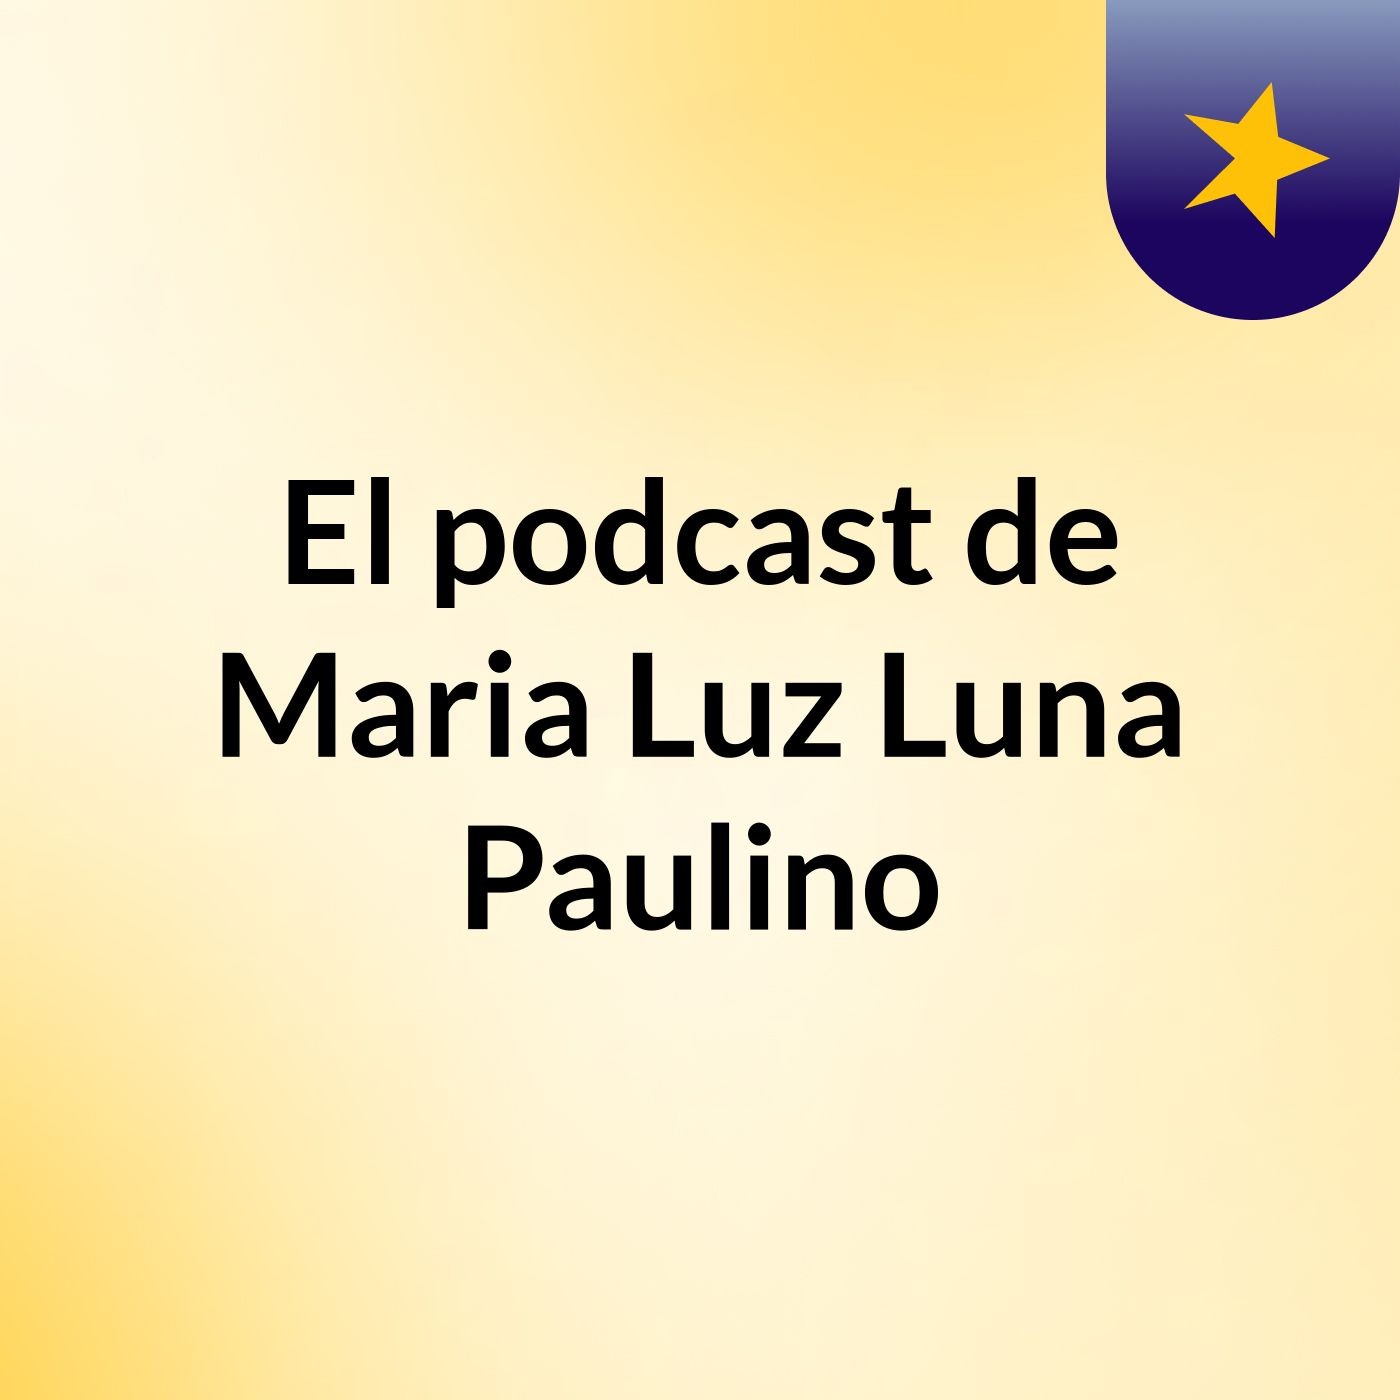 El podcast de Maria Luz Luna Paulino